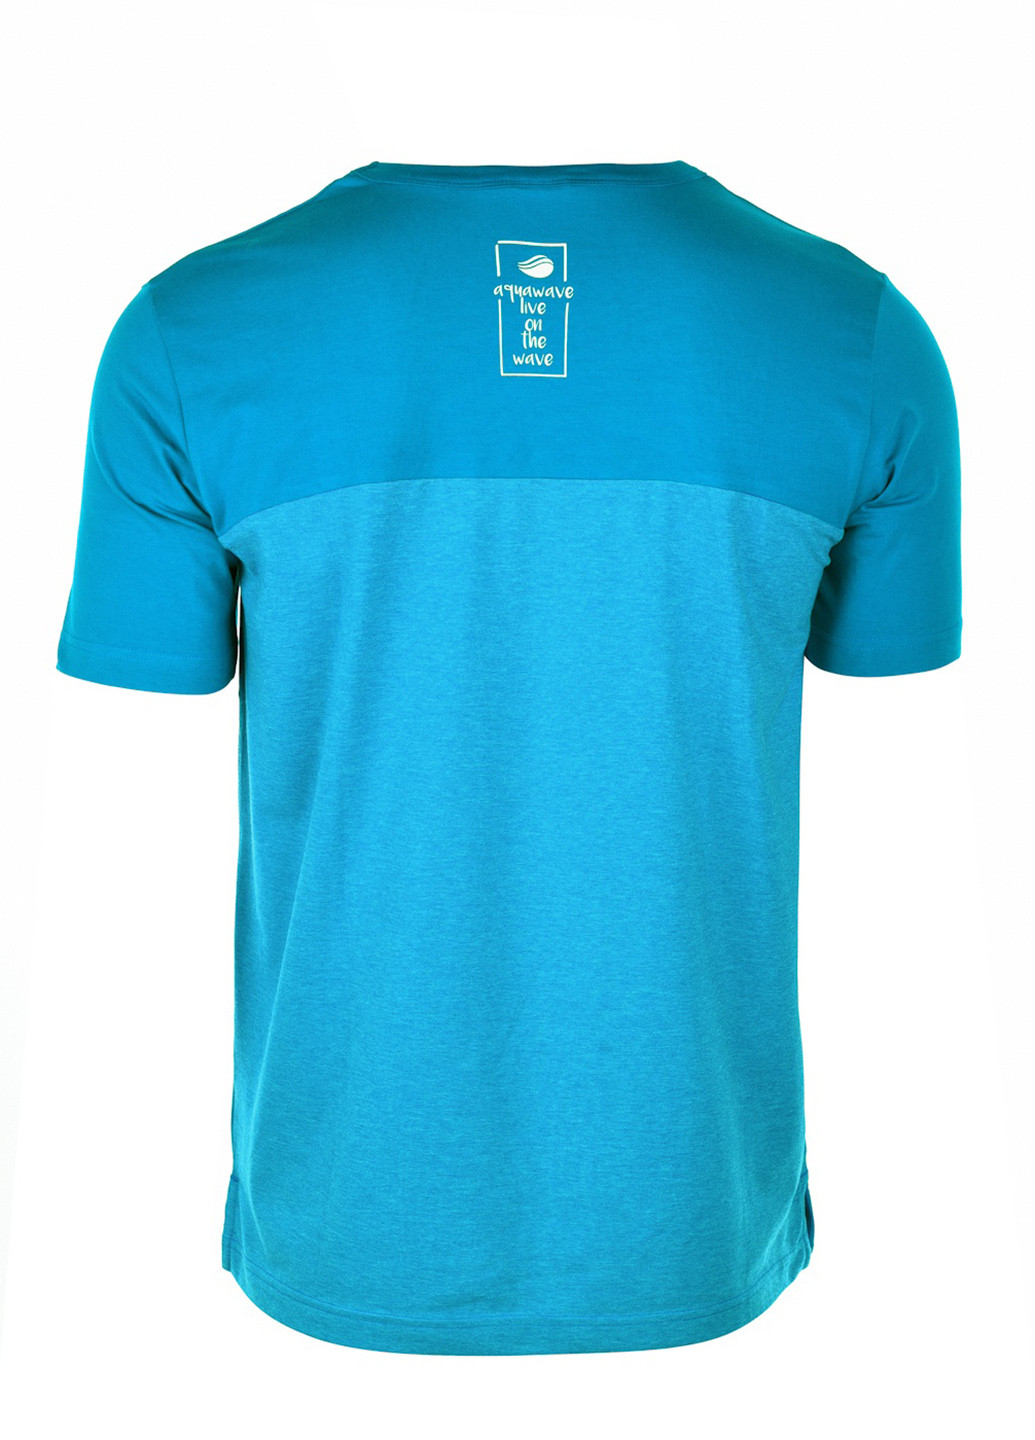 Синяя футболка с коротким рукавом AquaWave